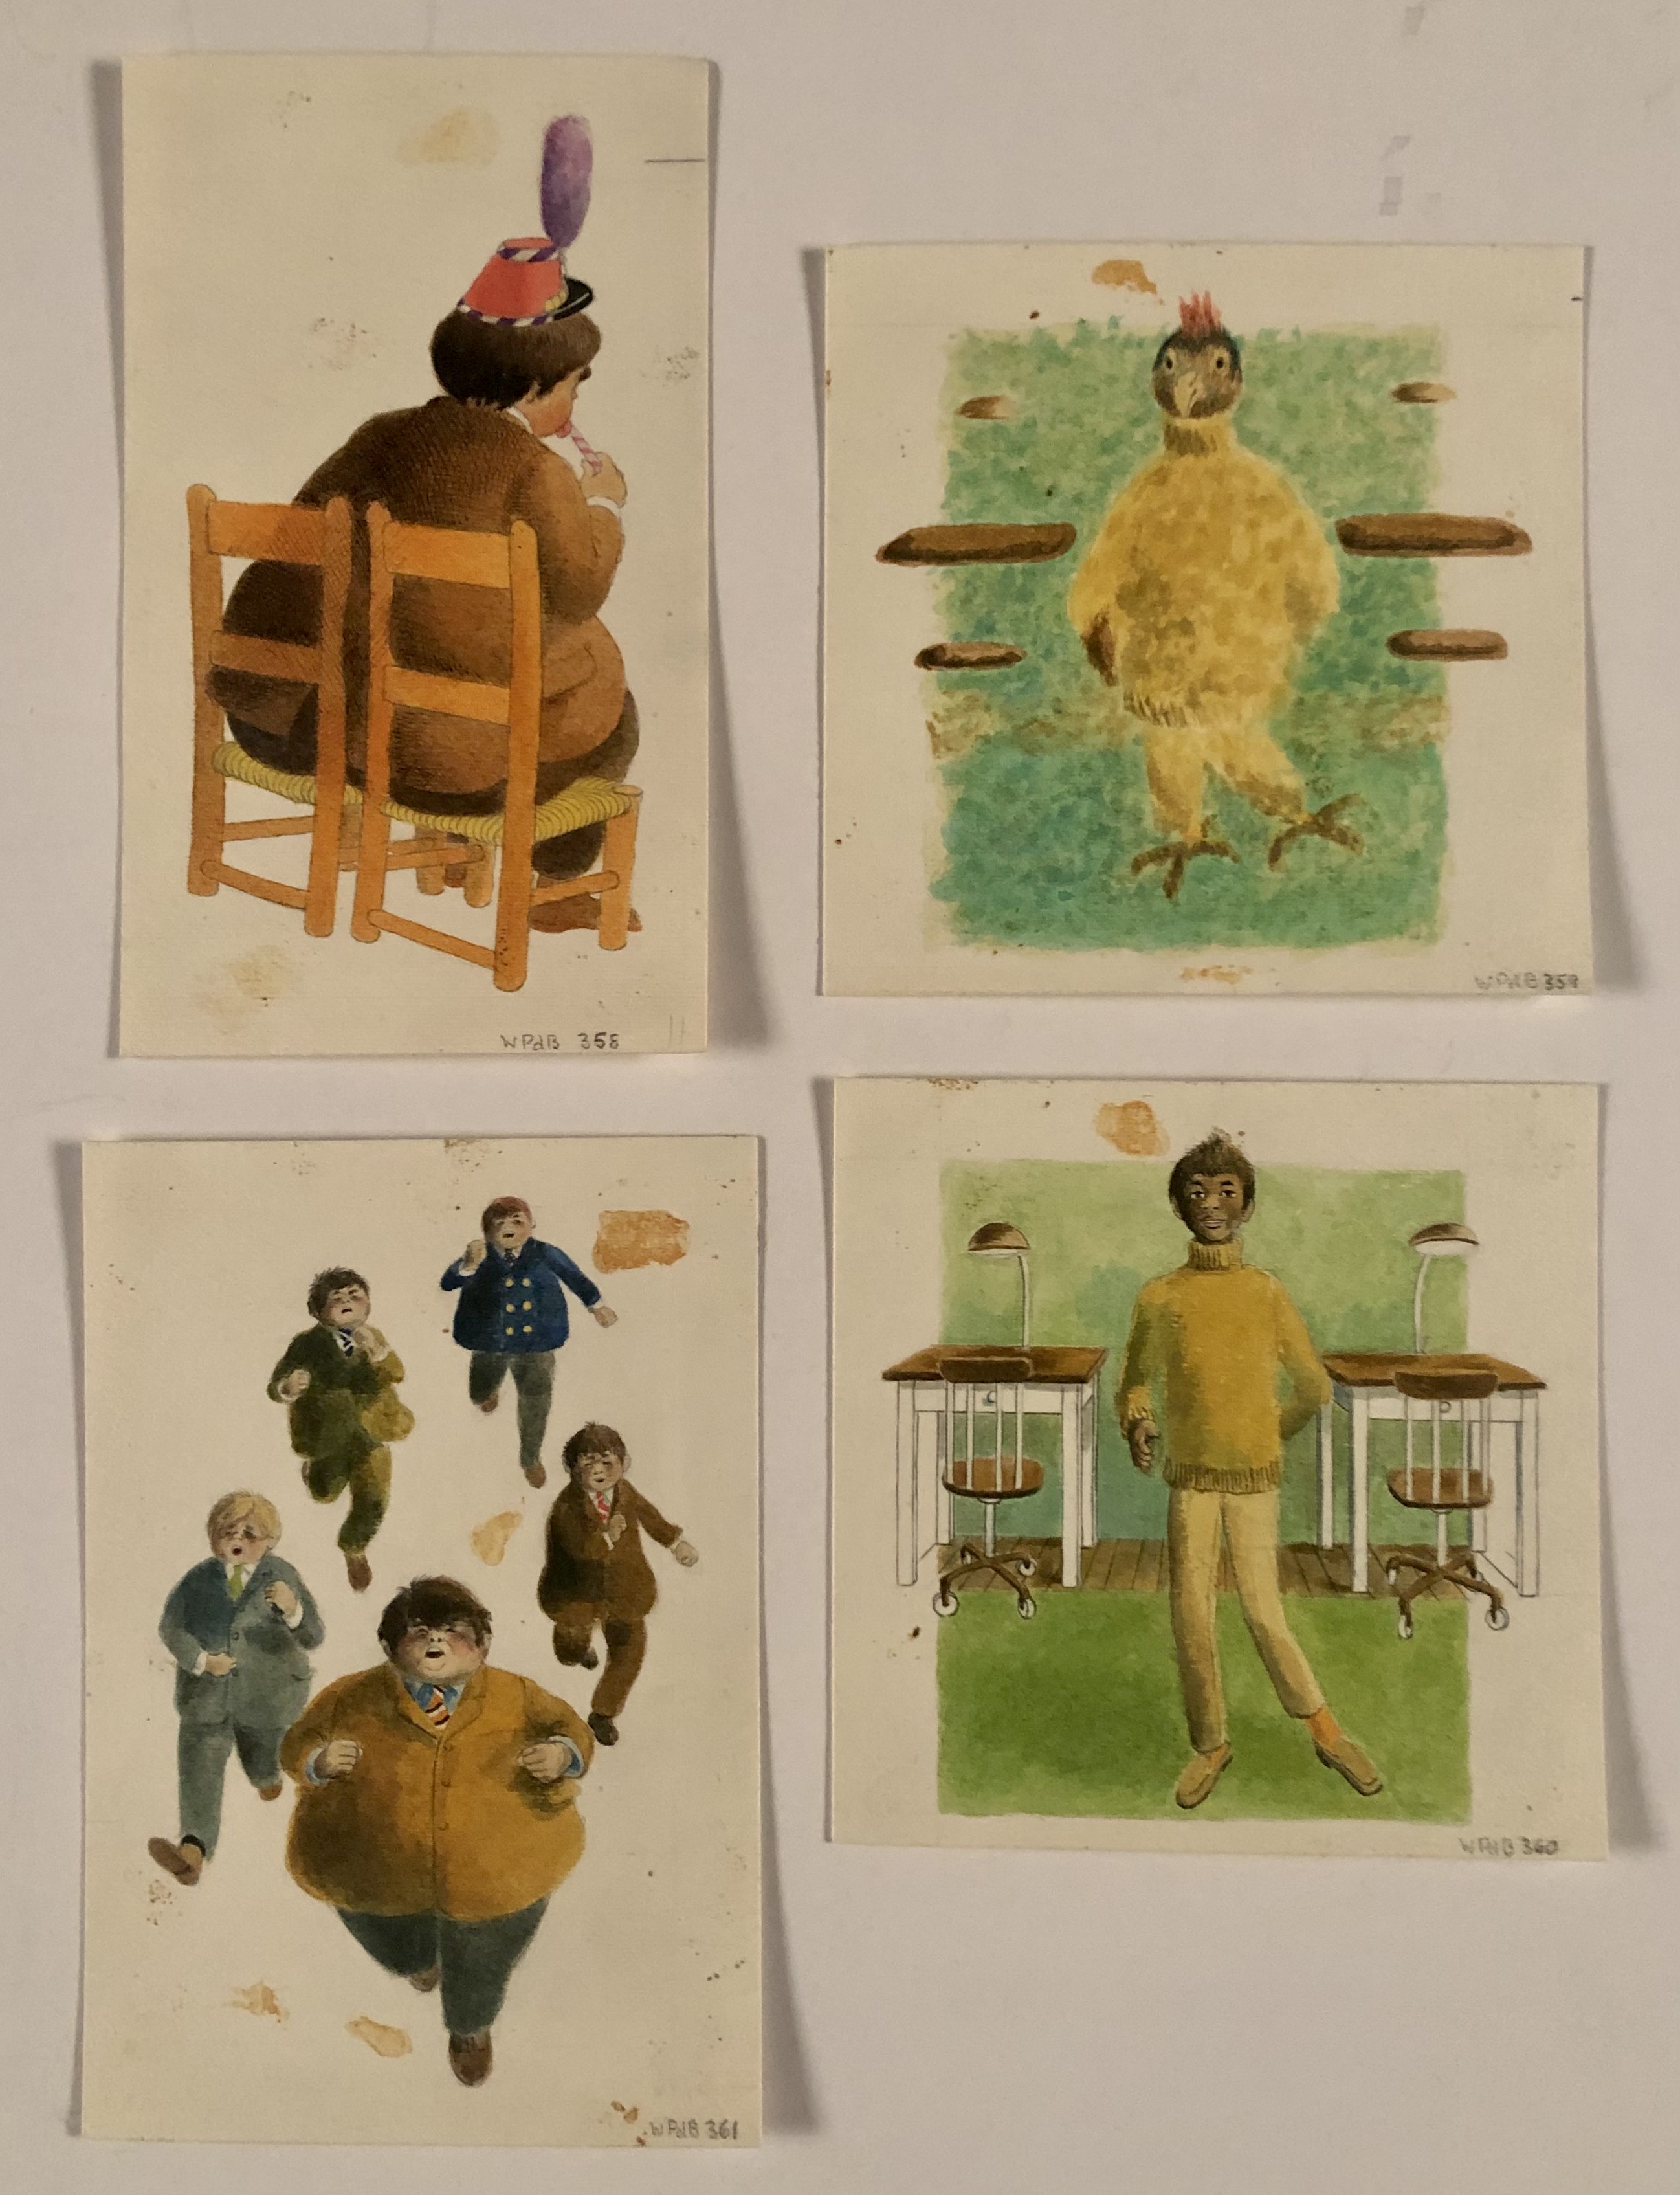 4 images - Porko eating; boy dressed as chicken; boys running; Porko's classmate standing between desks